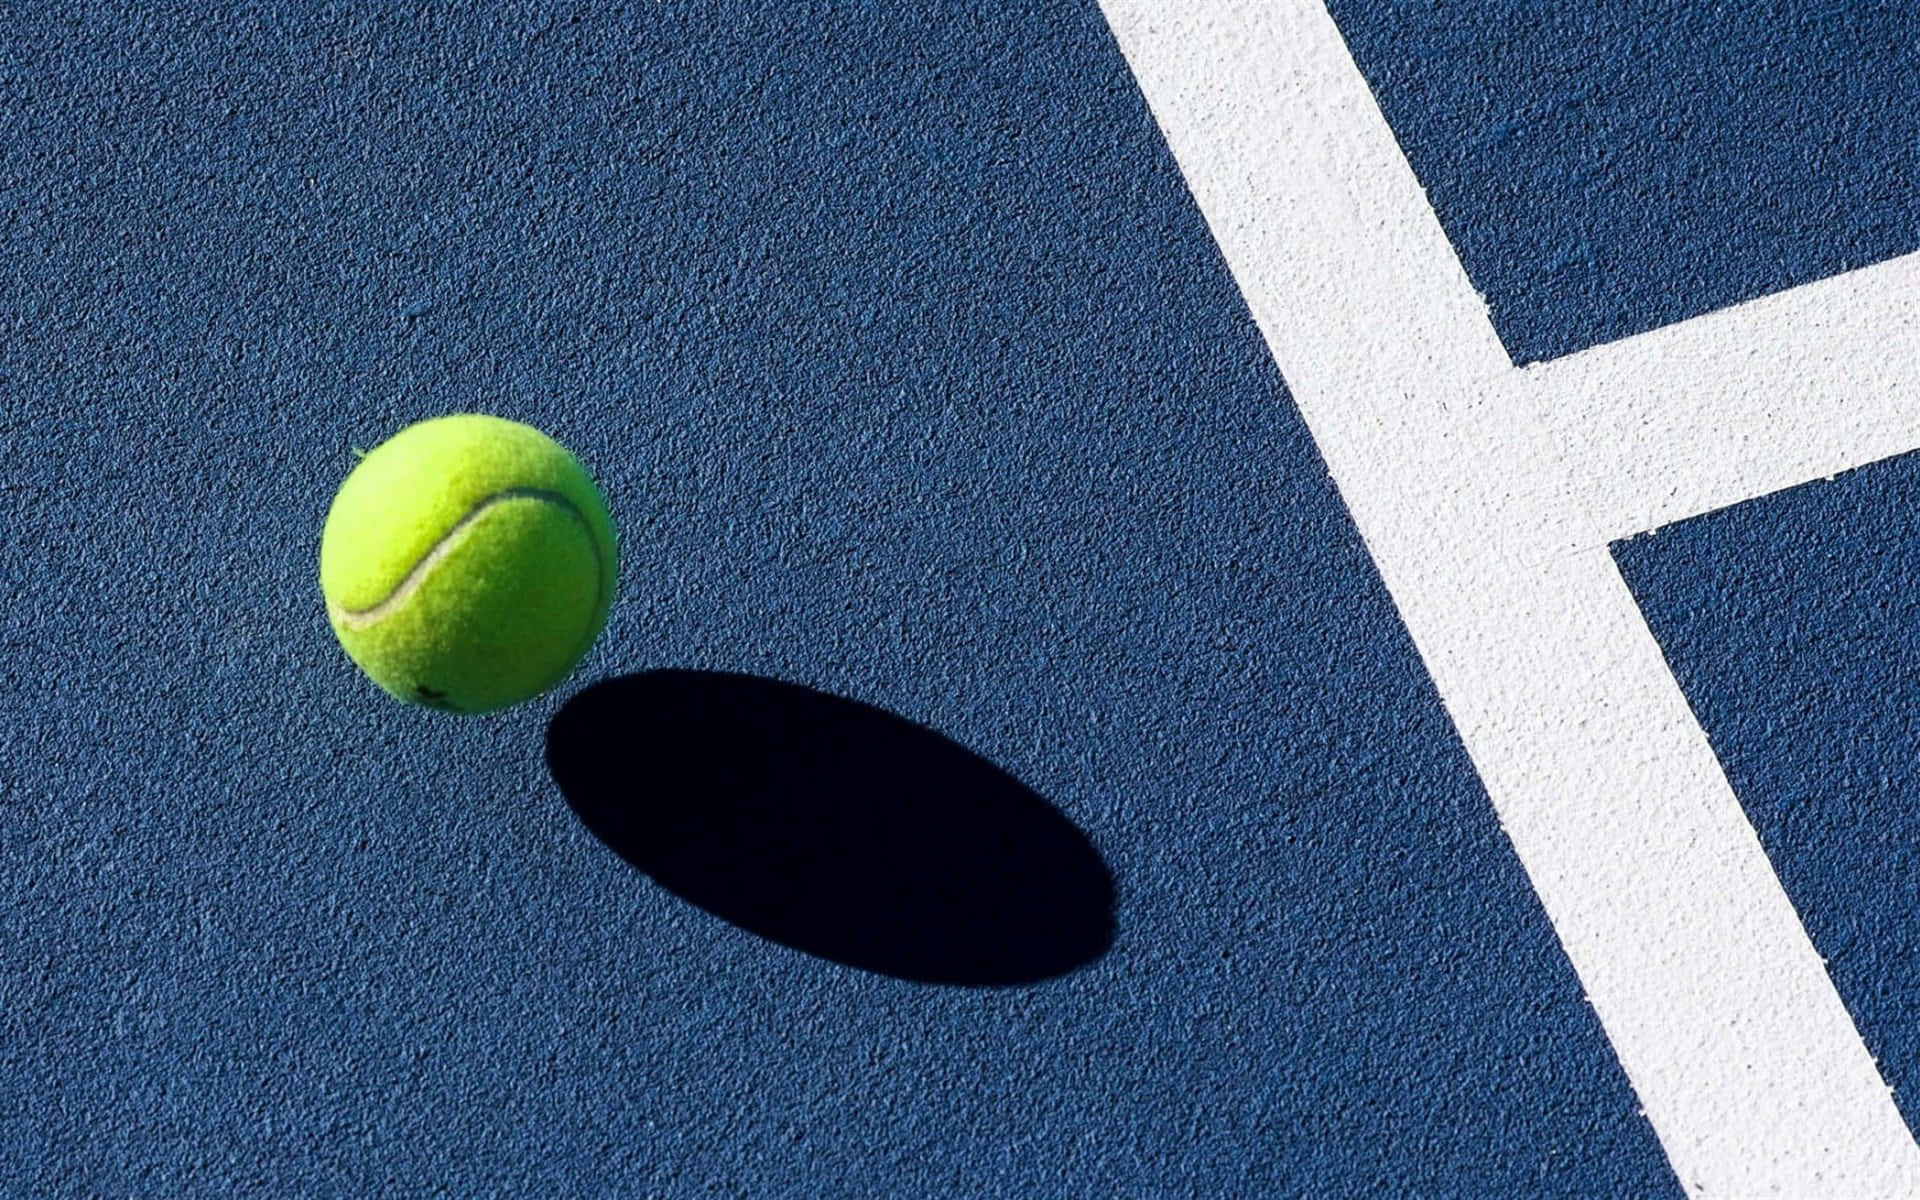 Download A Tennis Ball On A Blue Tennis Court | Wallpapers.com